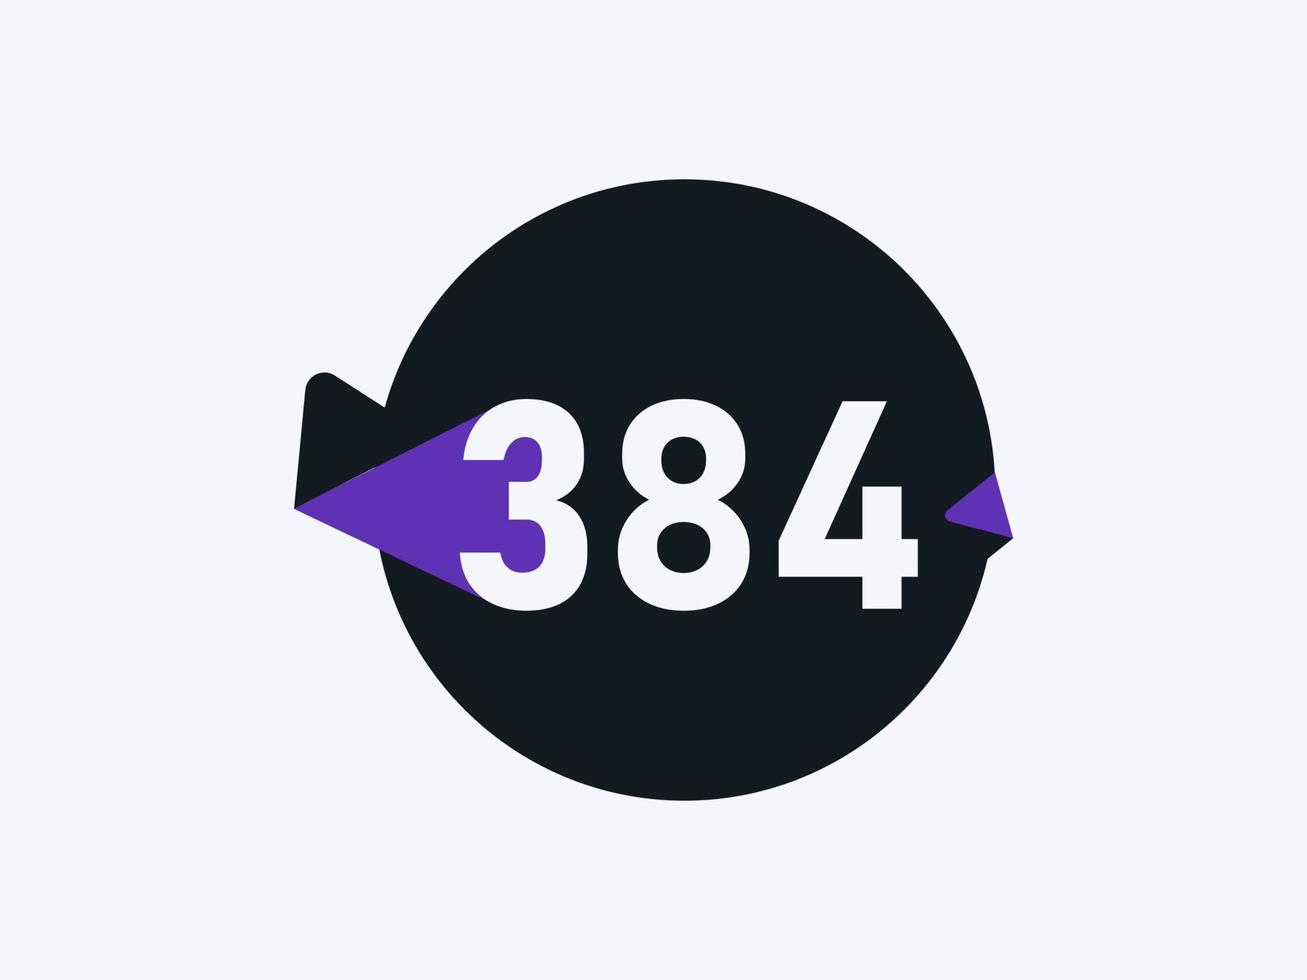 384 Number logo icon design vector image. Number logo icon design vector image